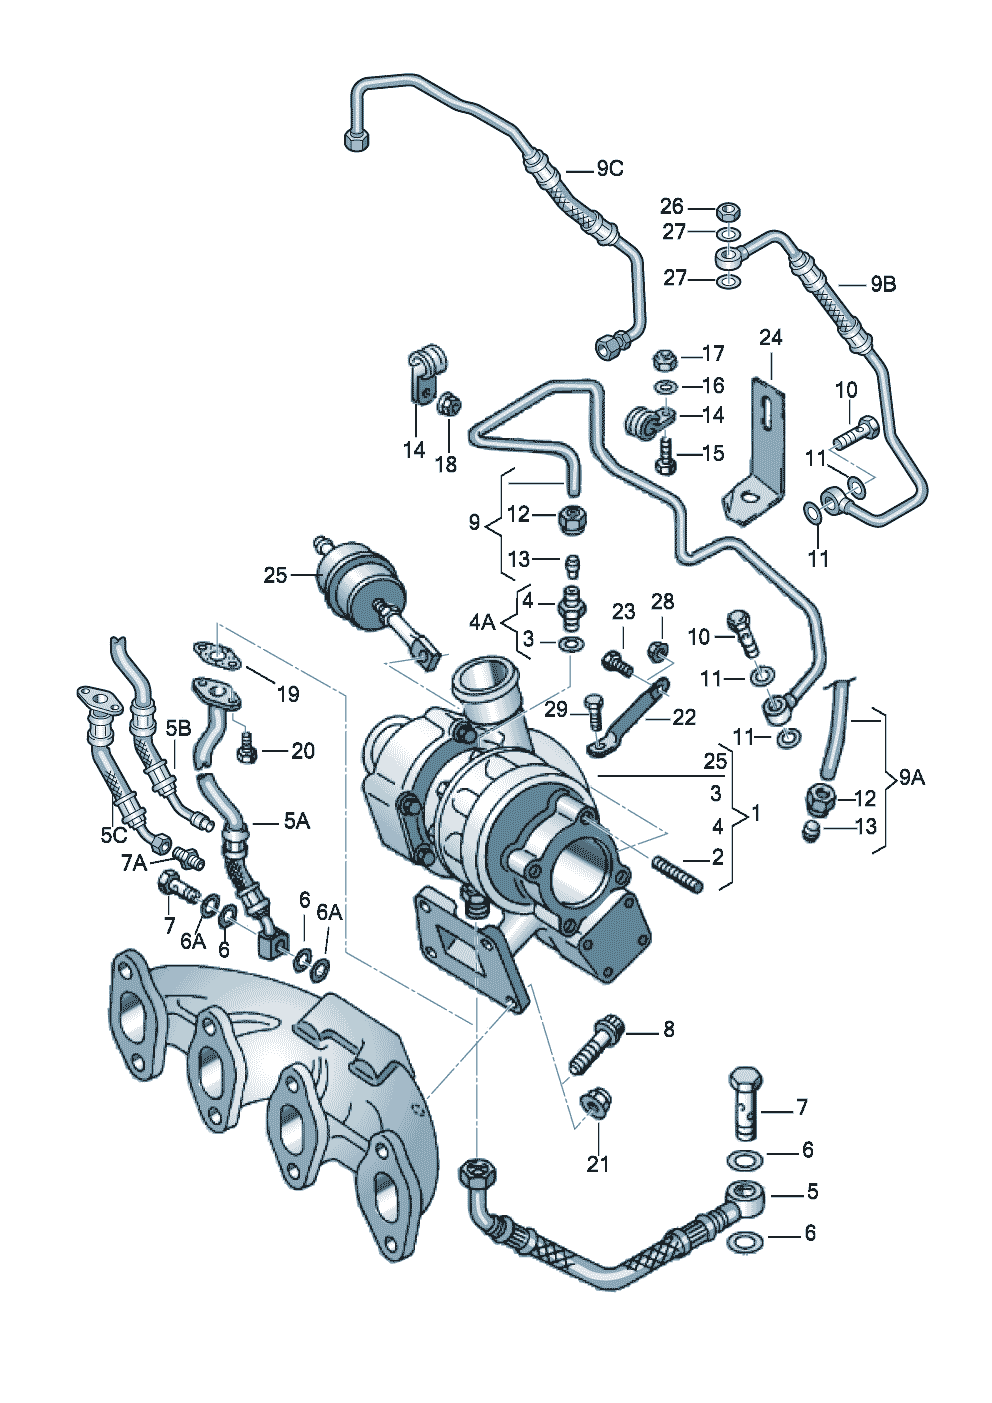 Exhaust gas turbocharger 1.9ltr. - Audi A6/Avant - a6